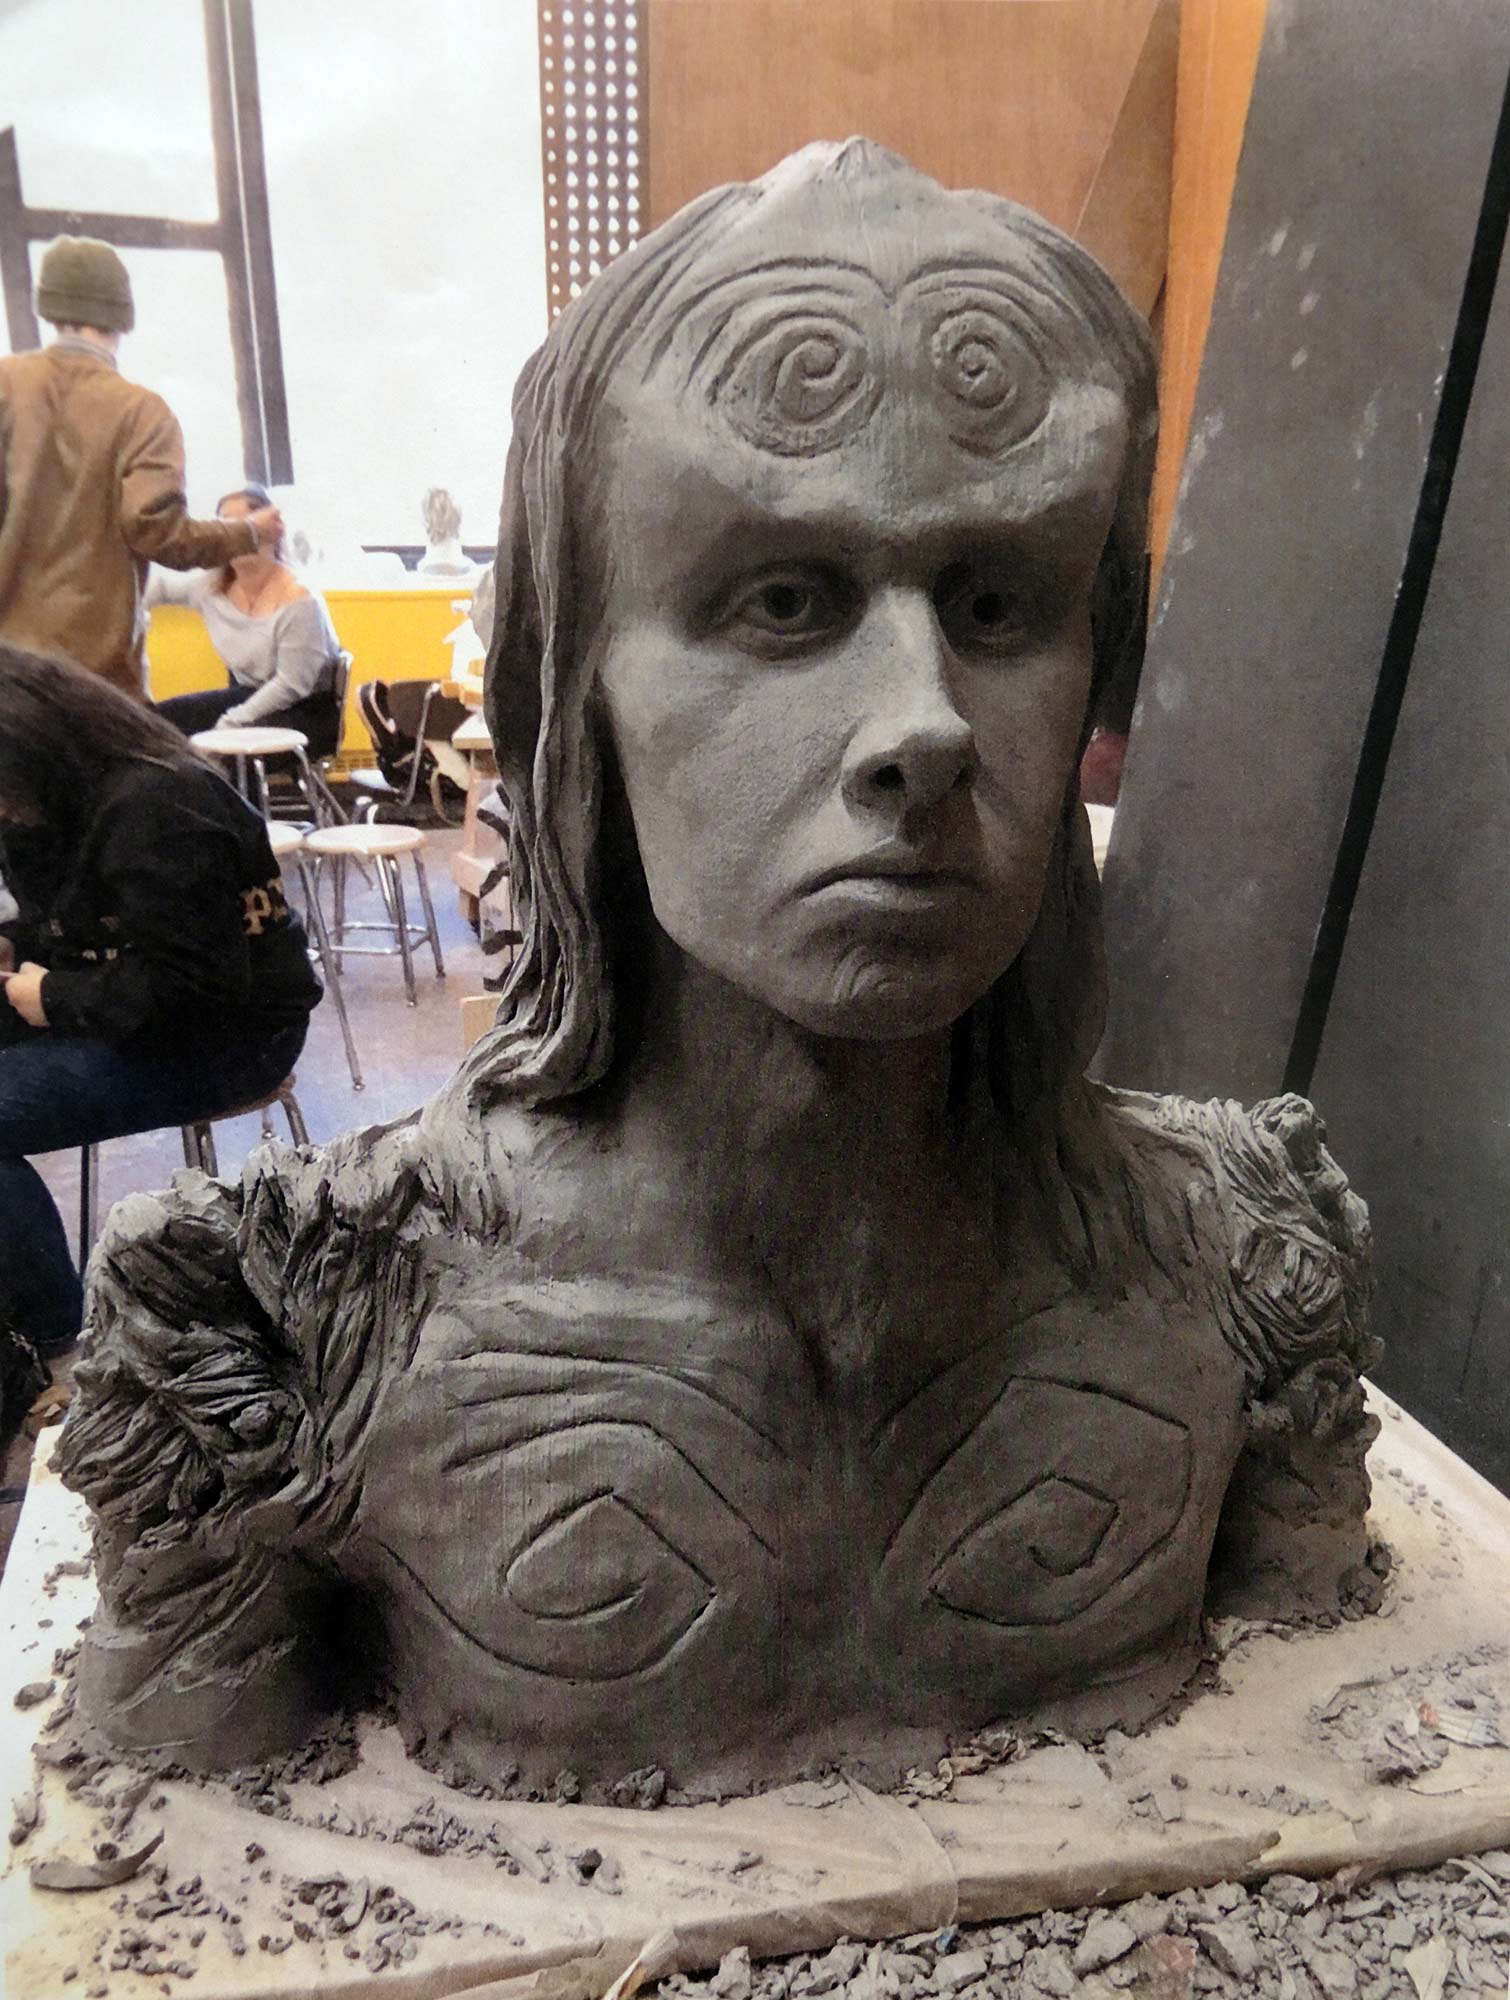 A sculpture of a head